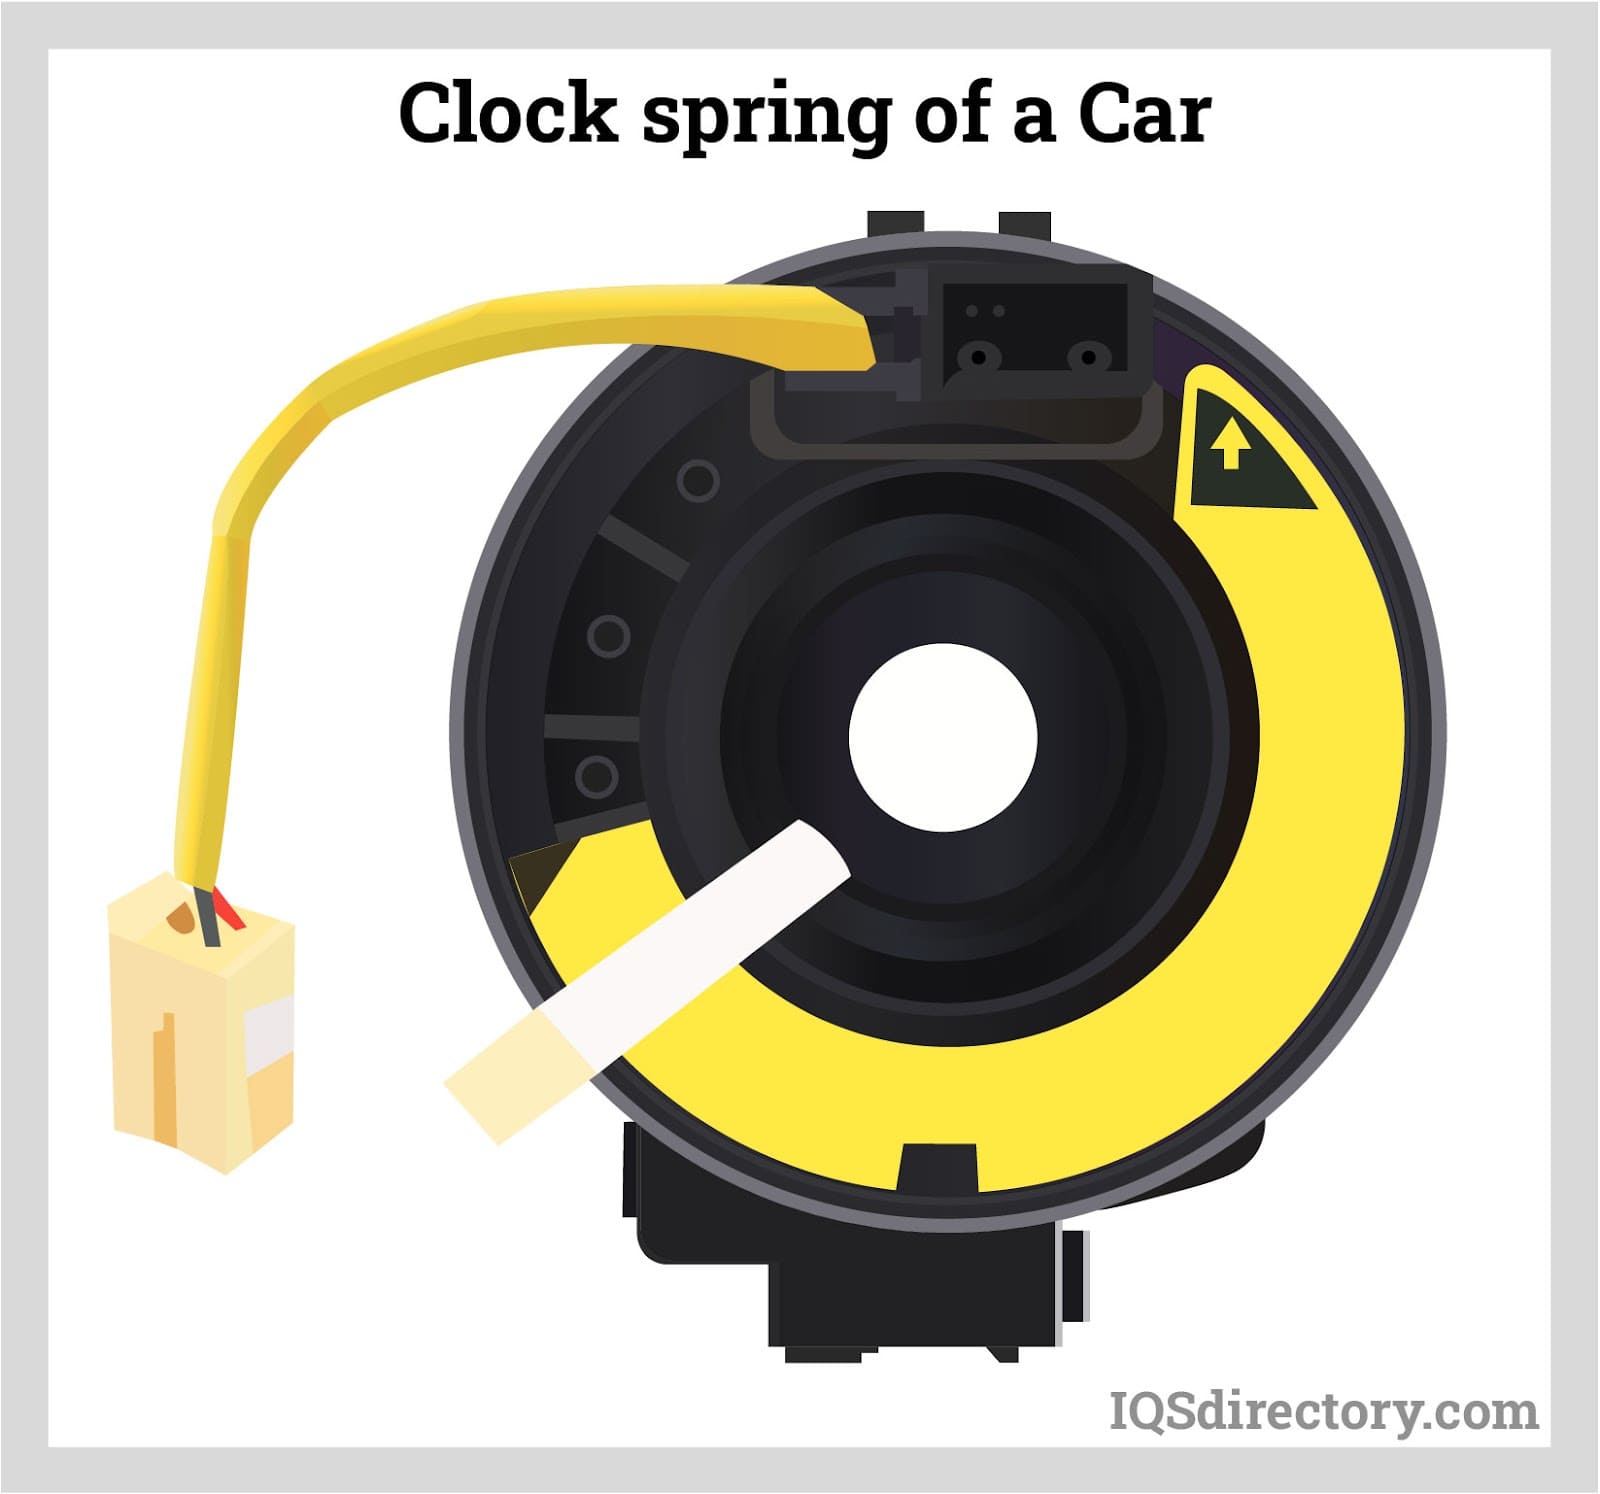 Clock spring of a Car